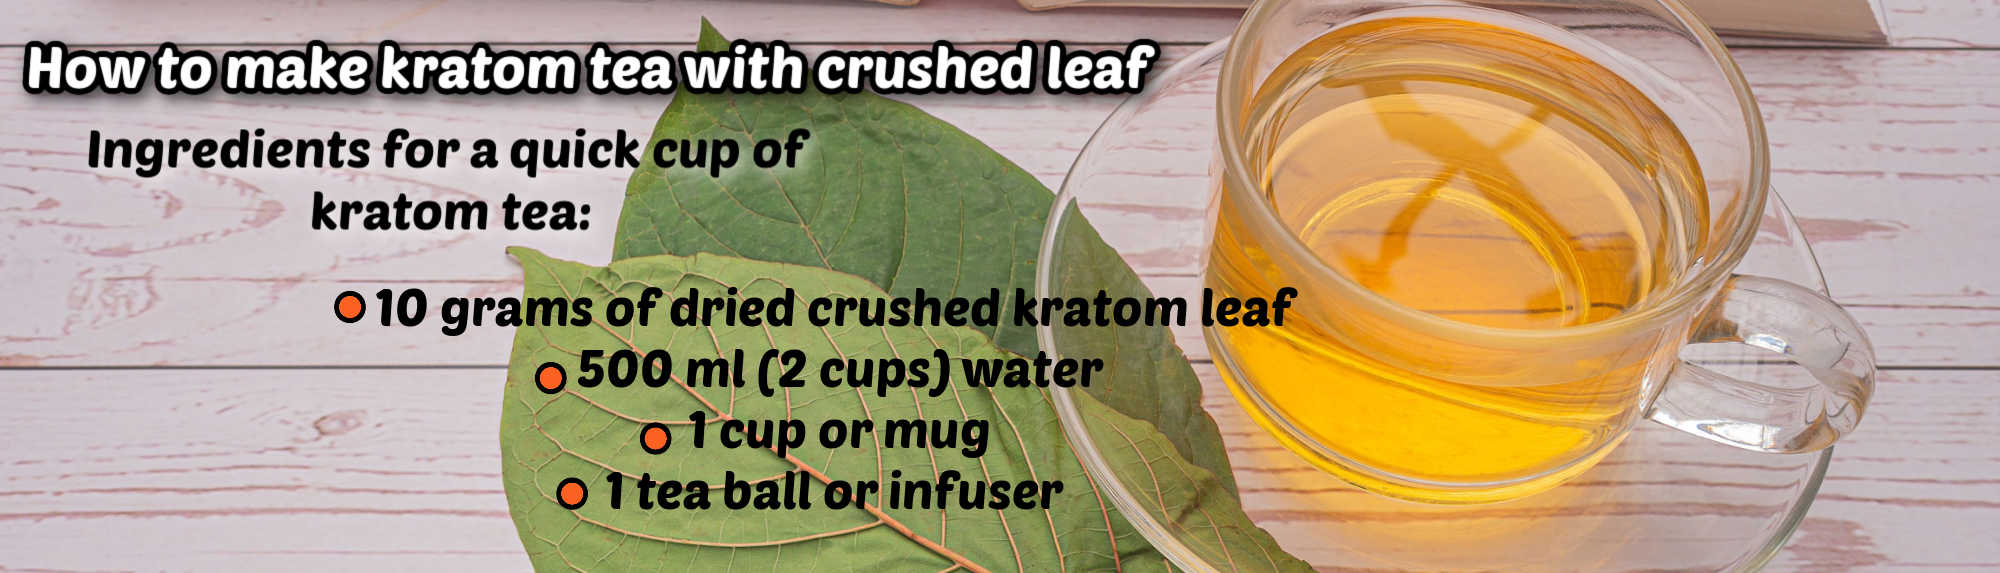 How to Make Kratom Tea with Powder or Crushed Leaf